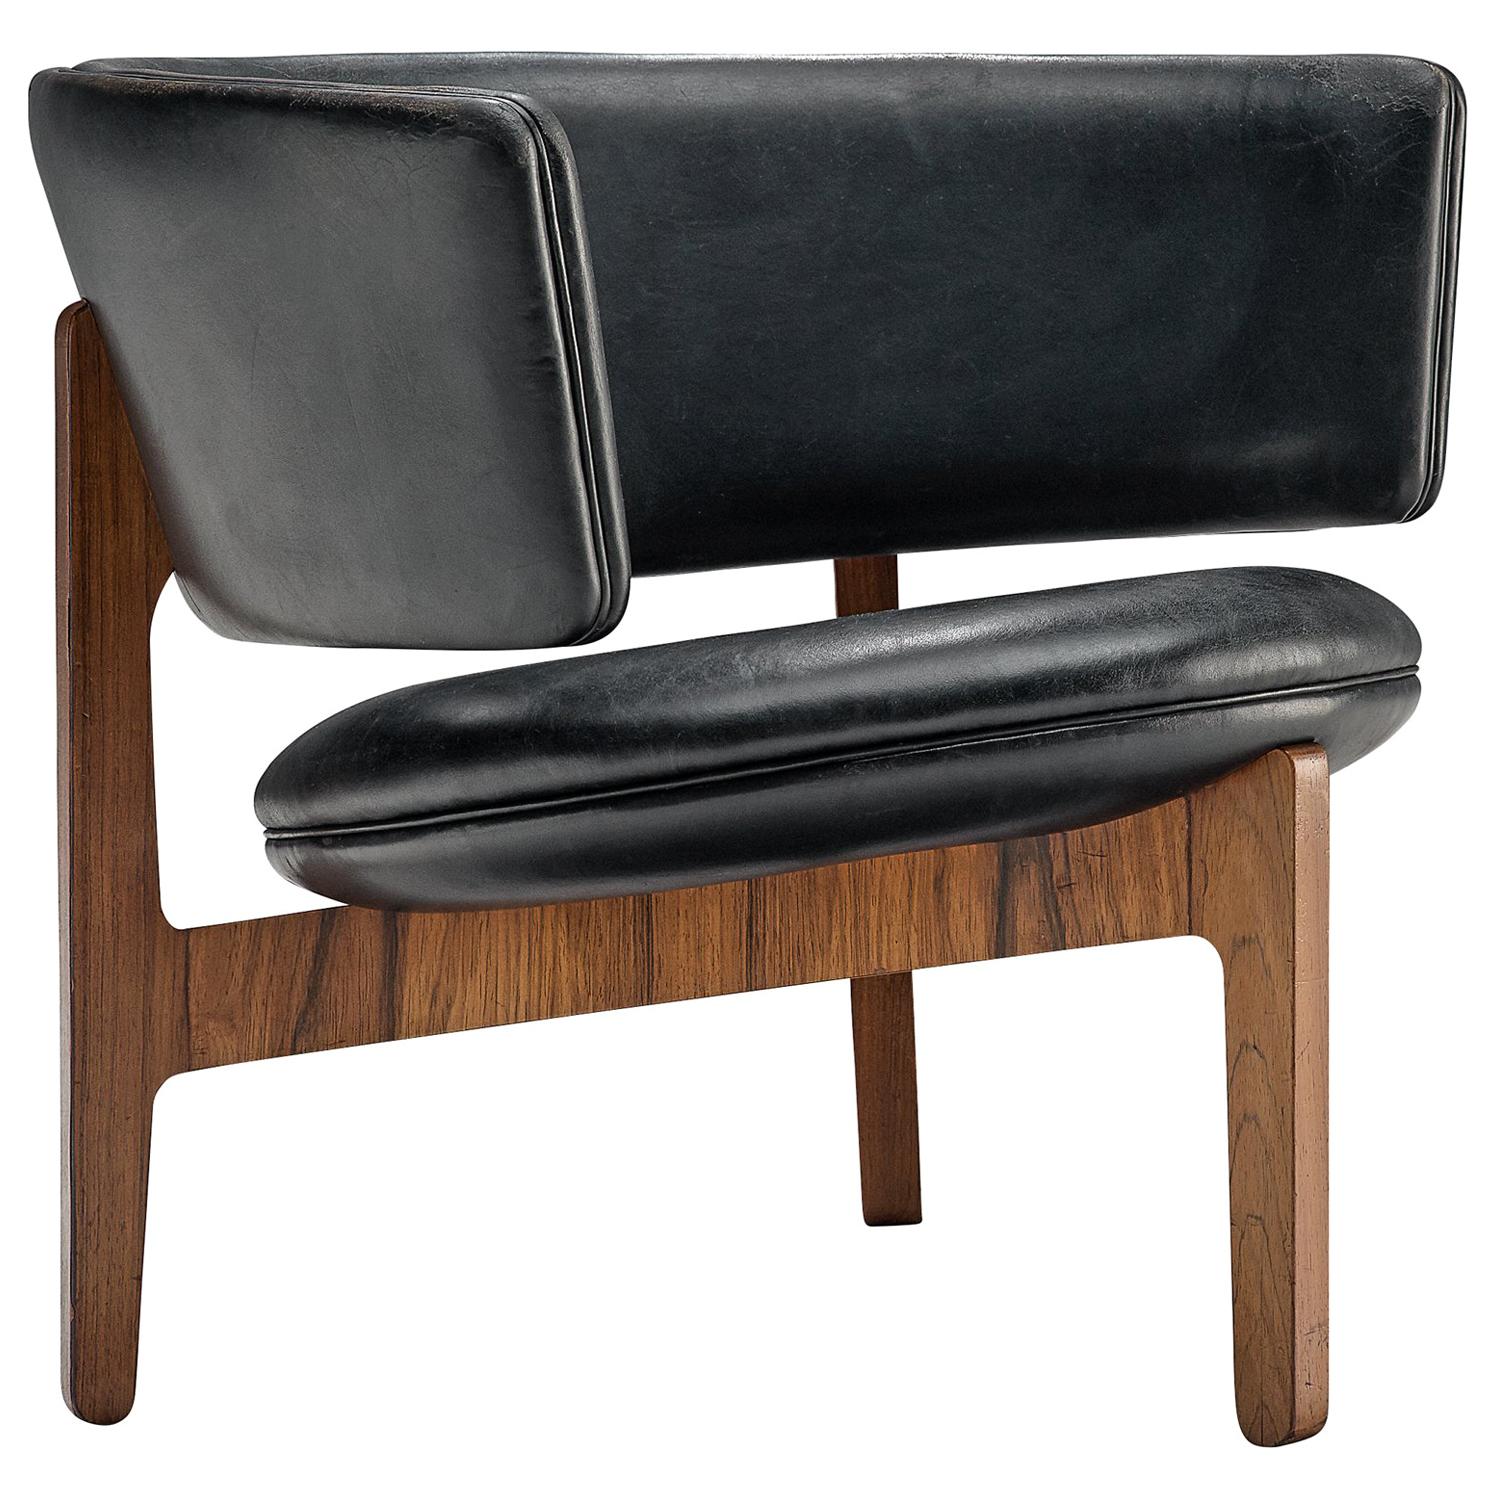 Sven Ellekaer Lounge Chair in Rosewood and Original Black Leather